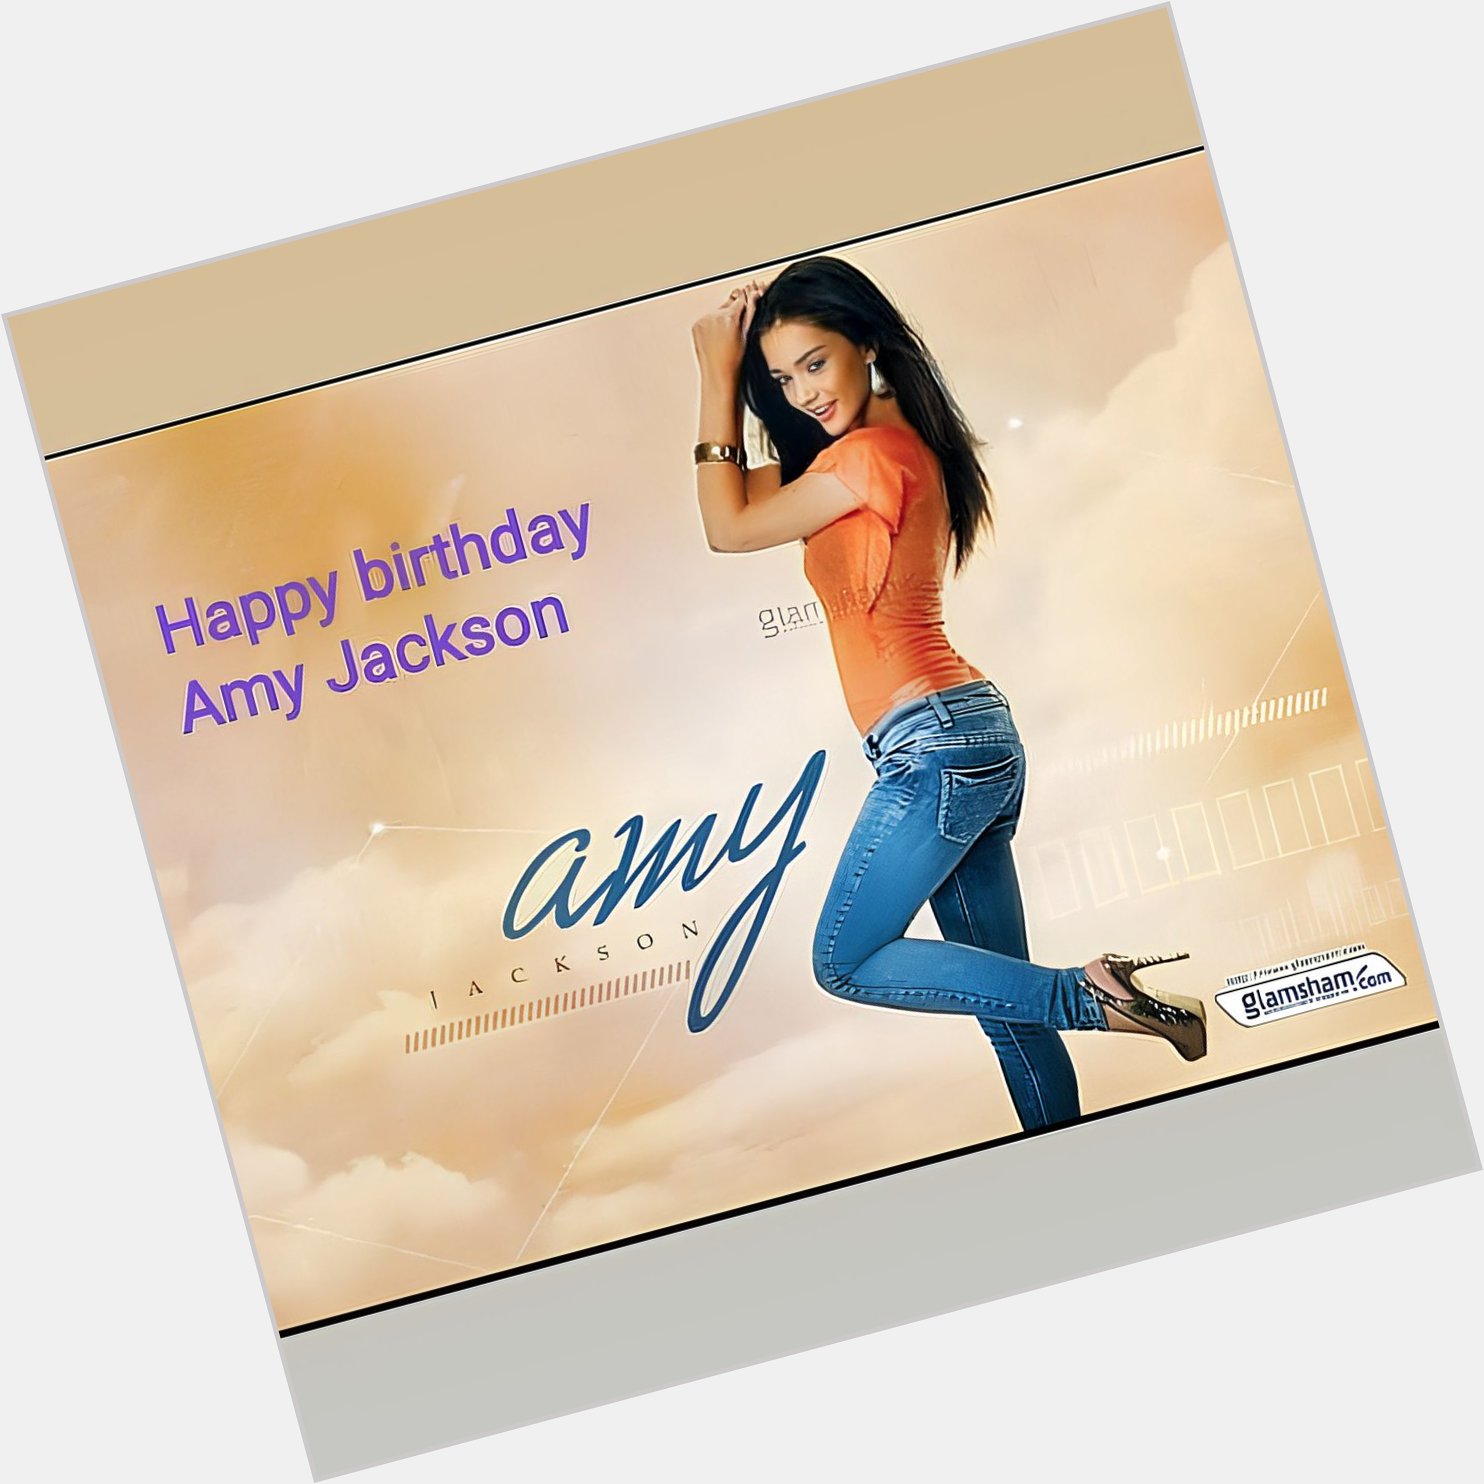  Happy birthday Amy Jackson                          